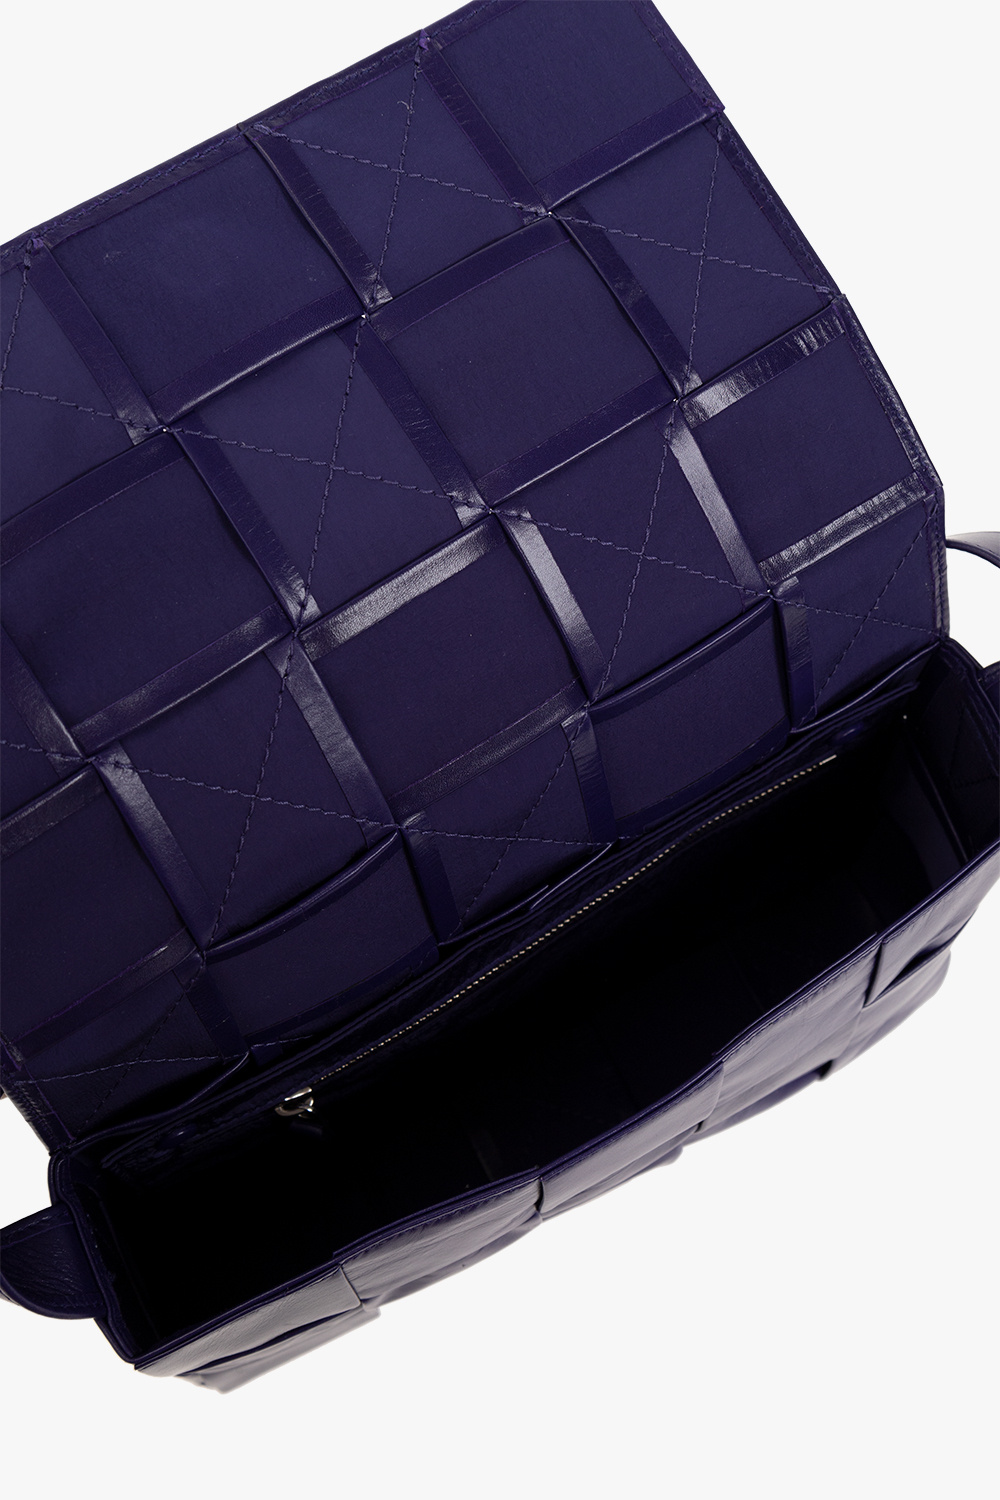 bottega platform Veneta ‘Cassette Small’ shoulder bag